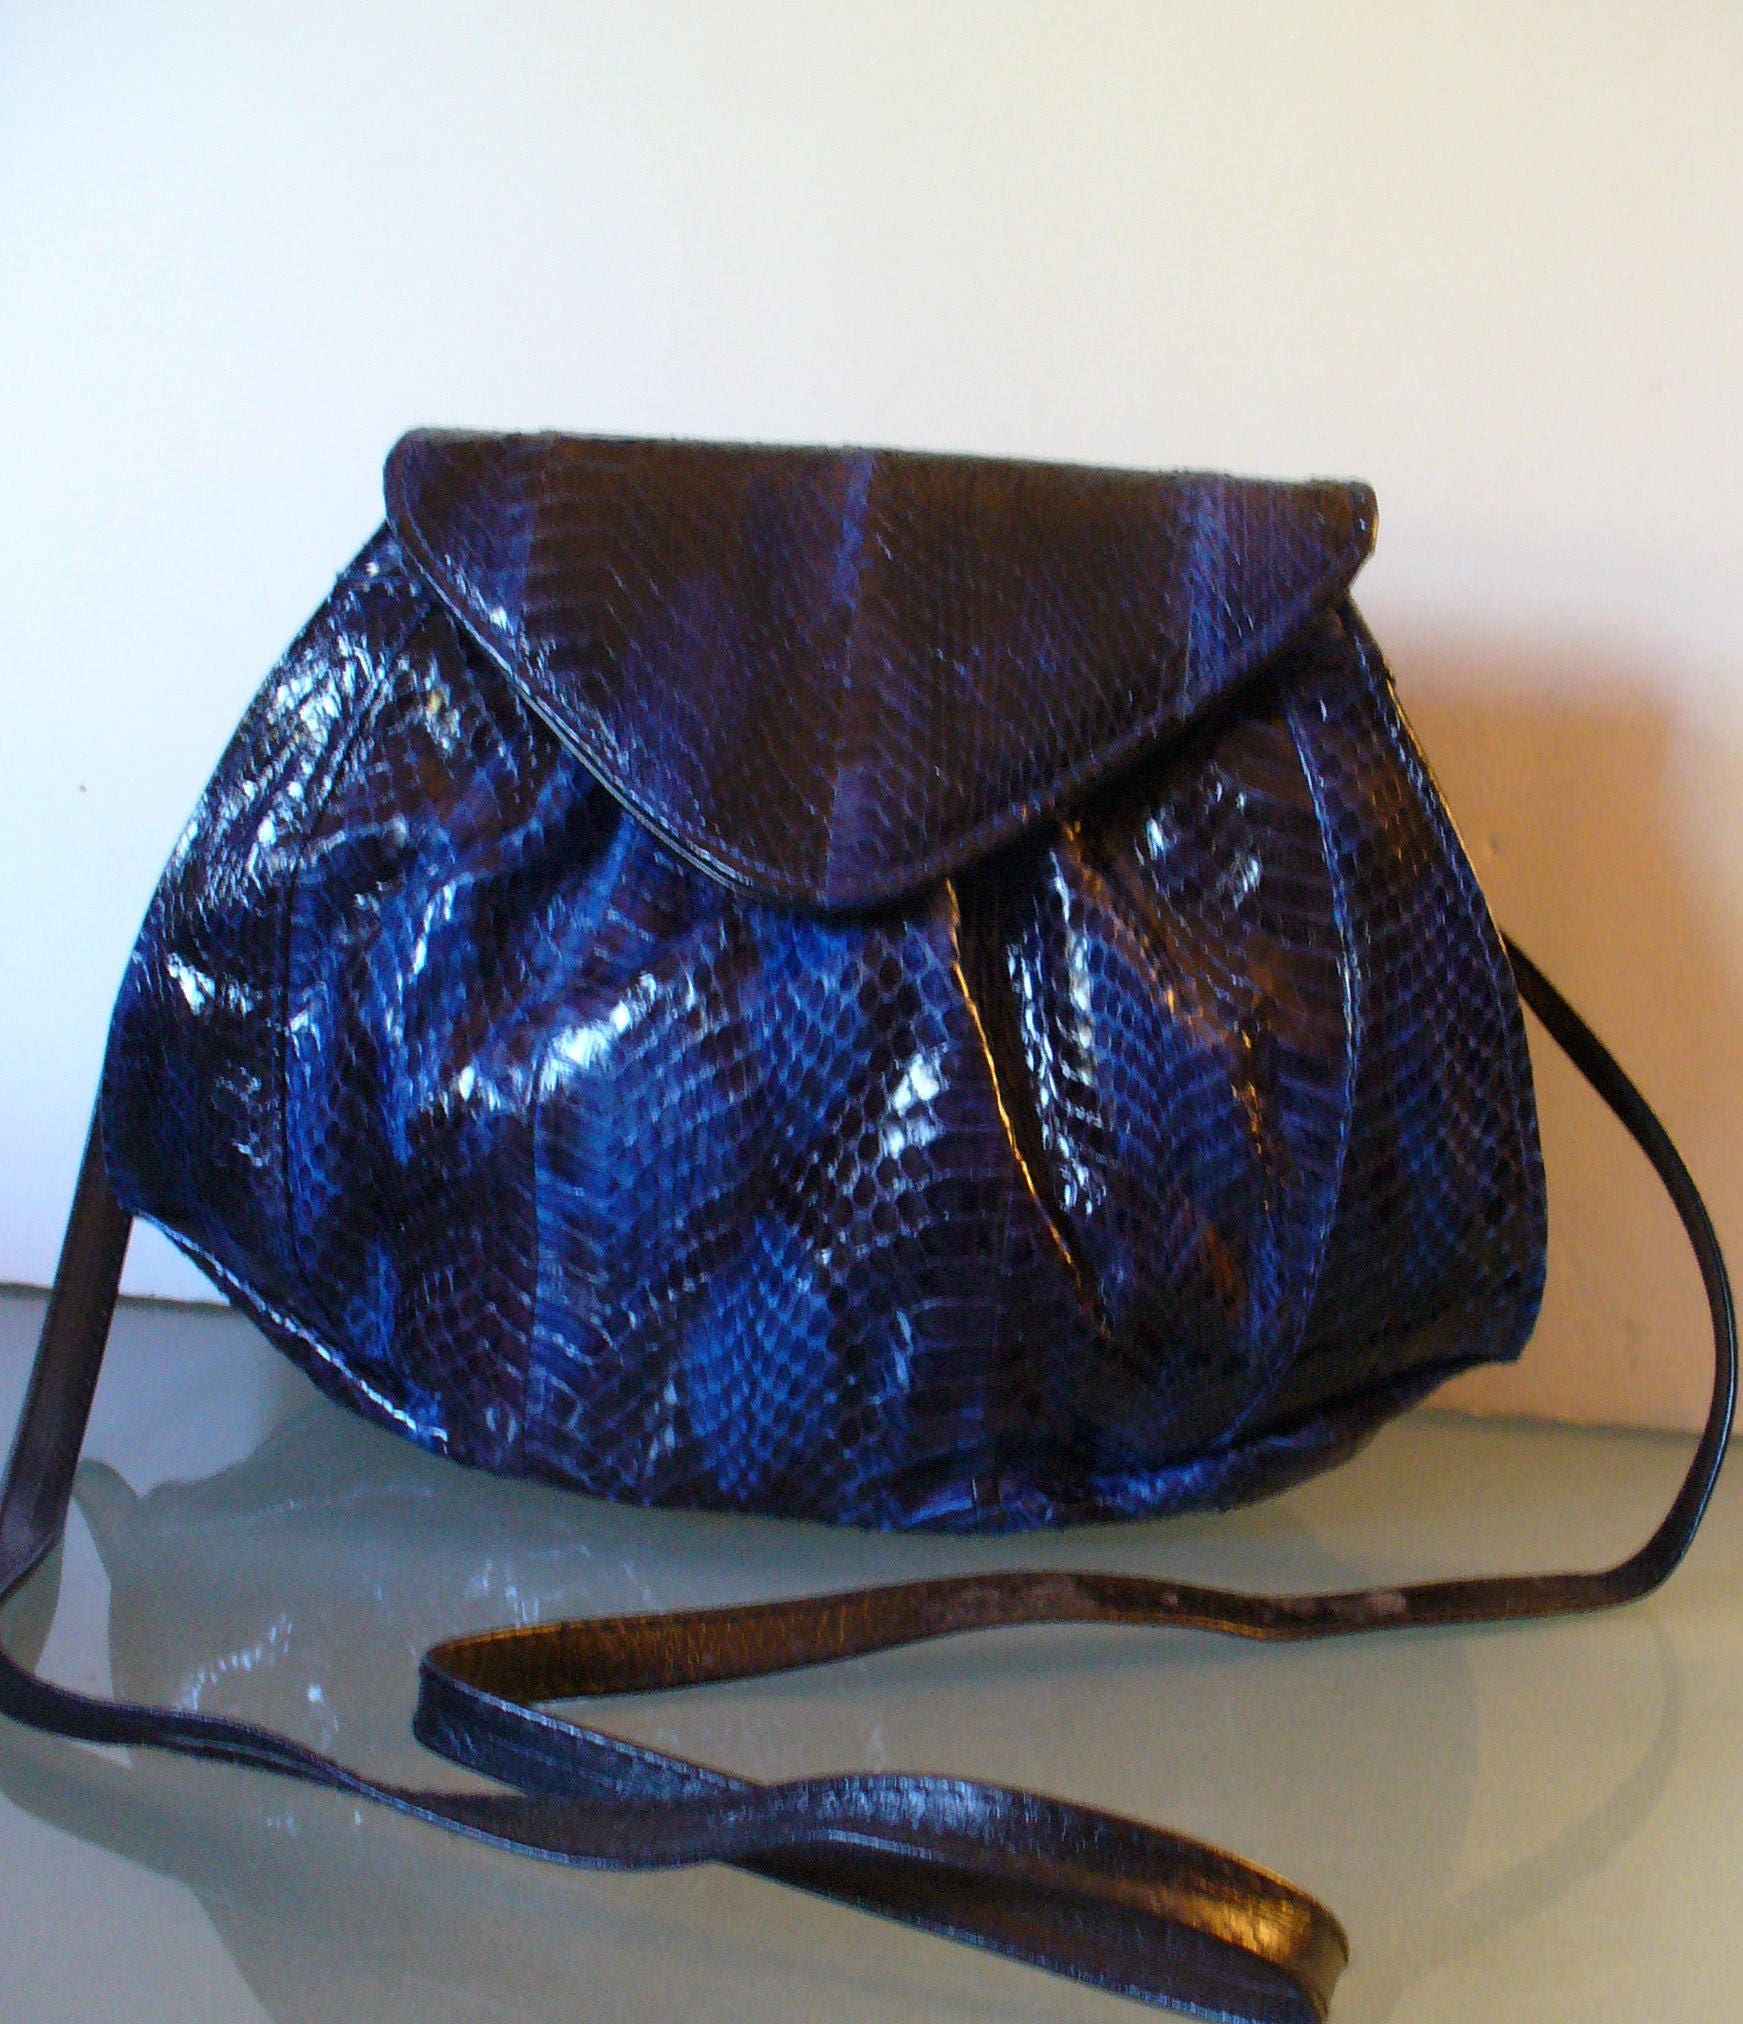 Carol J. handbag by Gianni Notaro 626 CELESTE